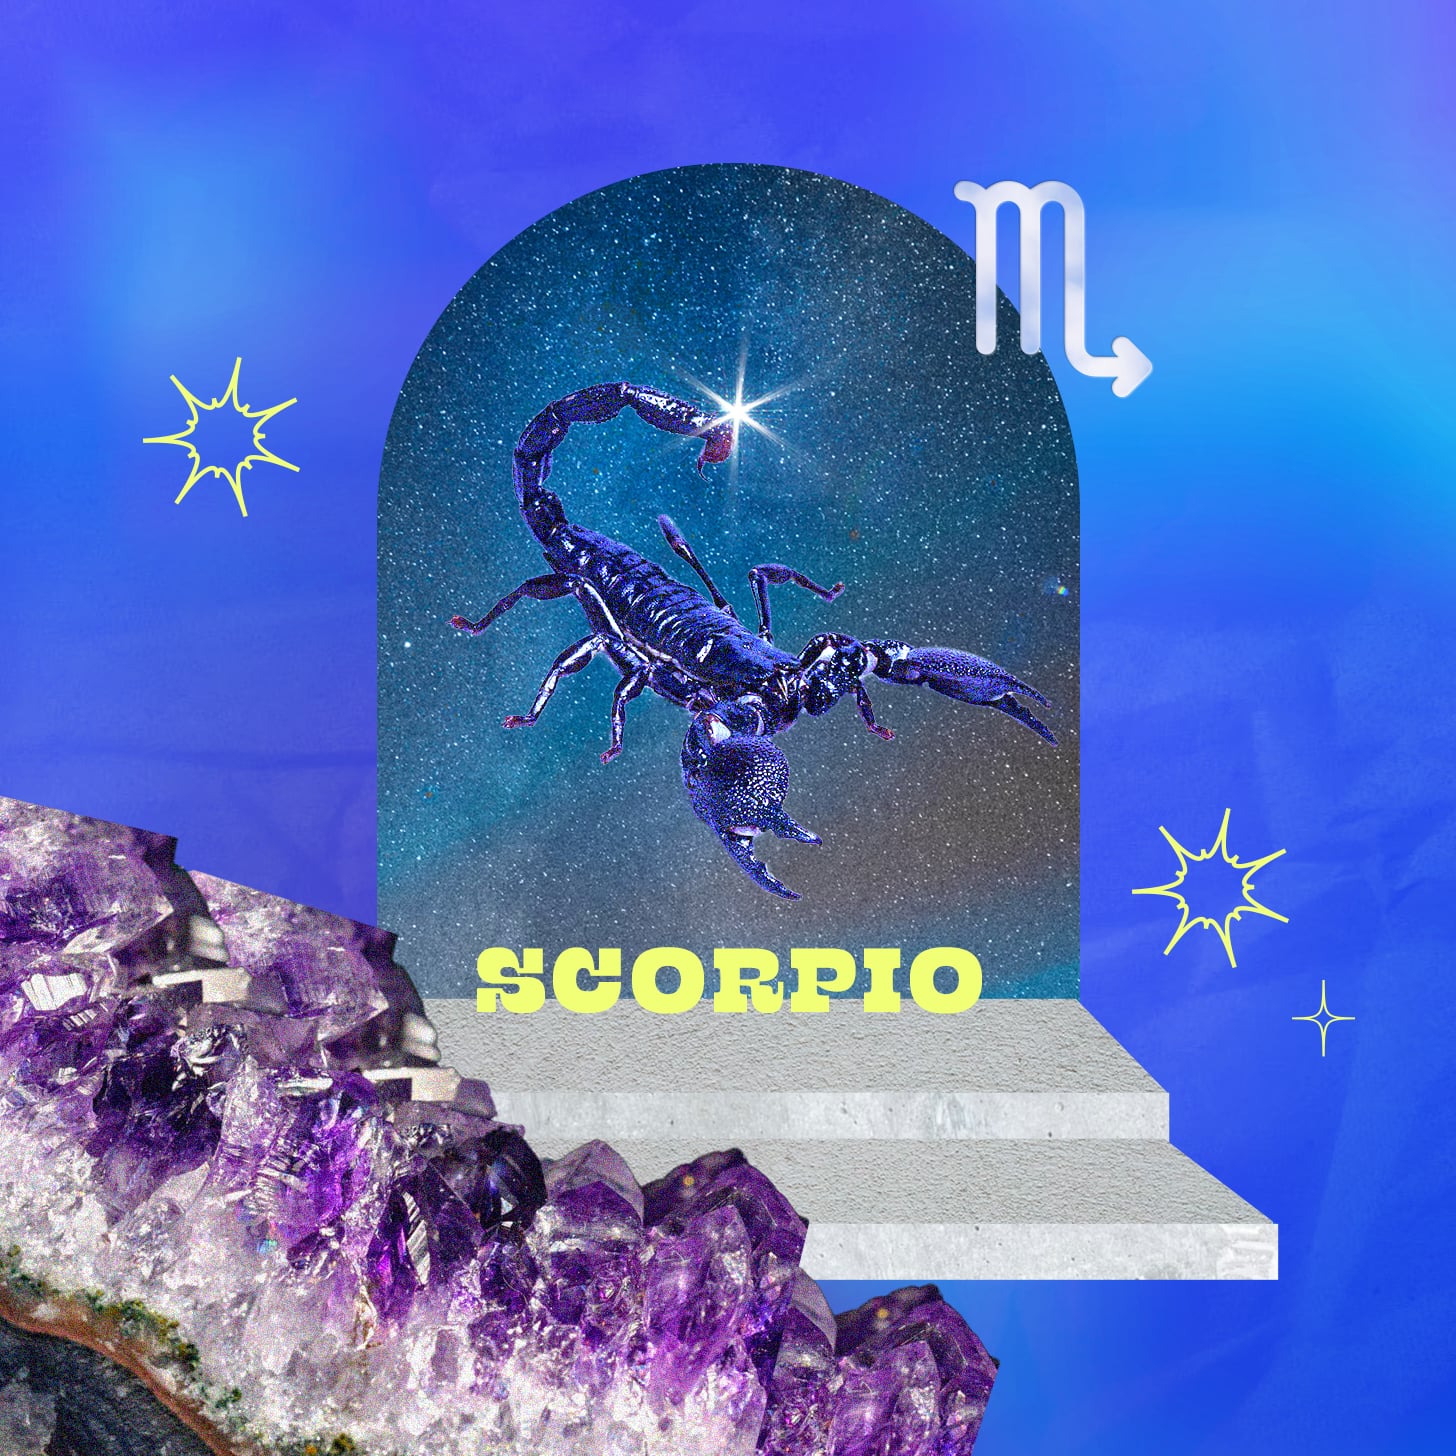 Scorpio weekly horoscope for April 24, 2022